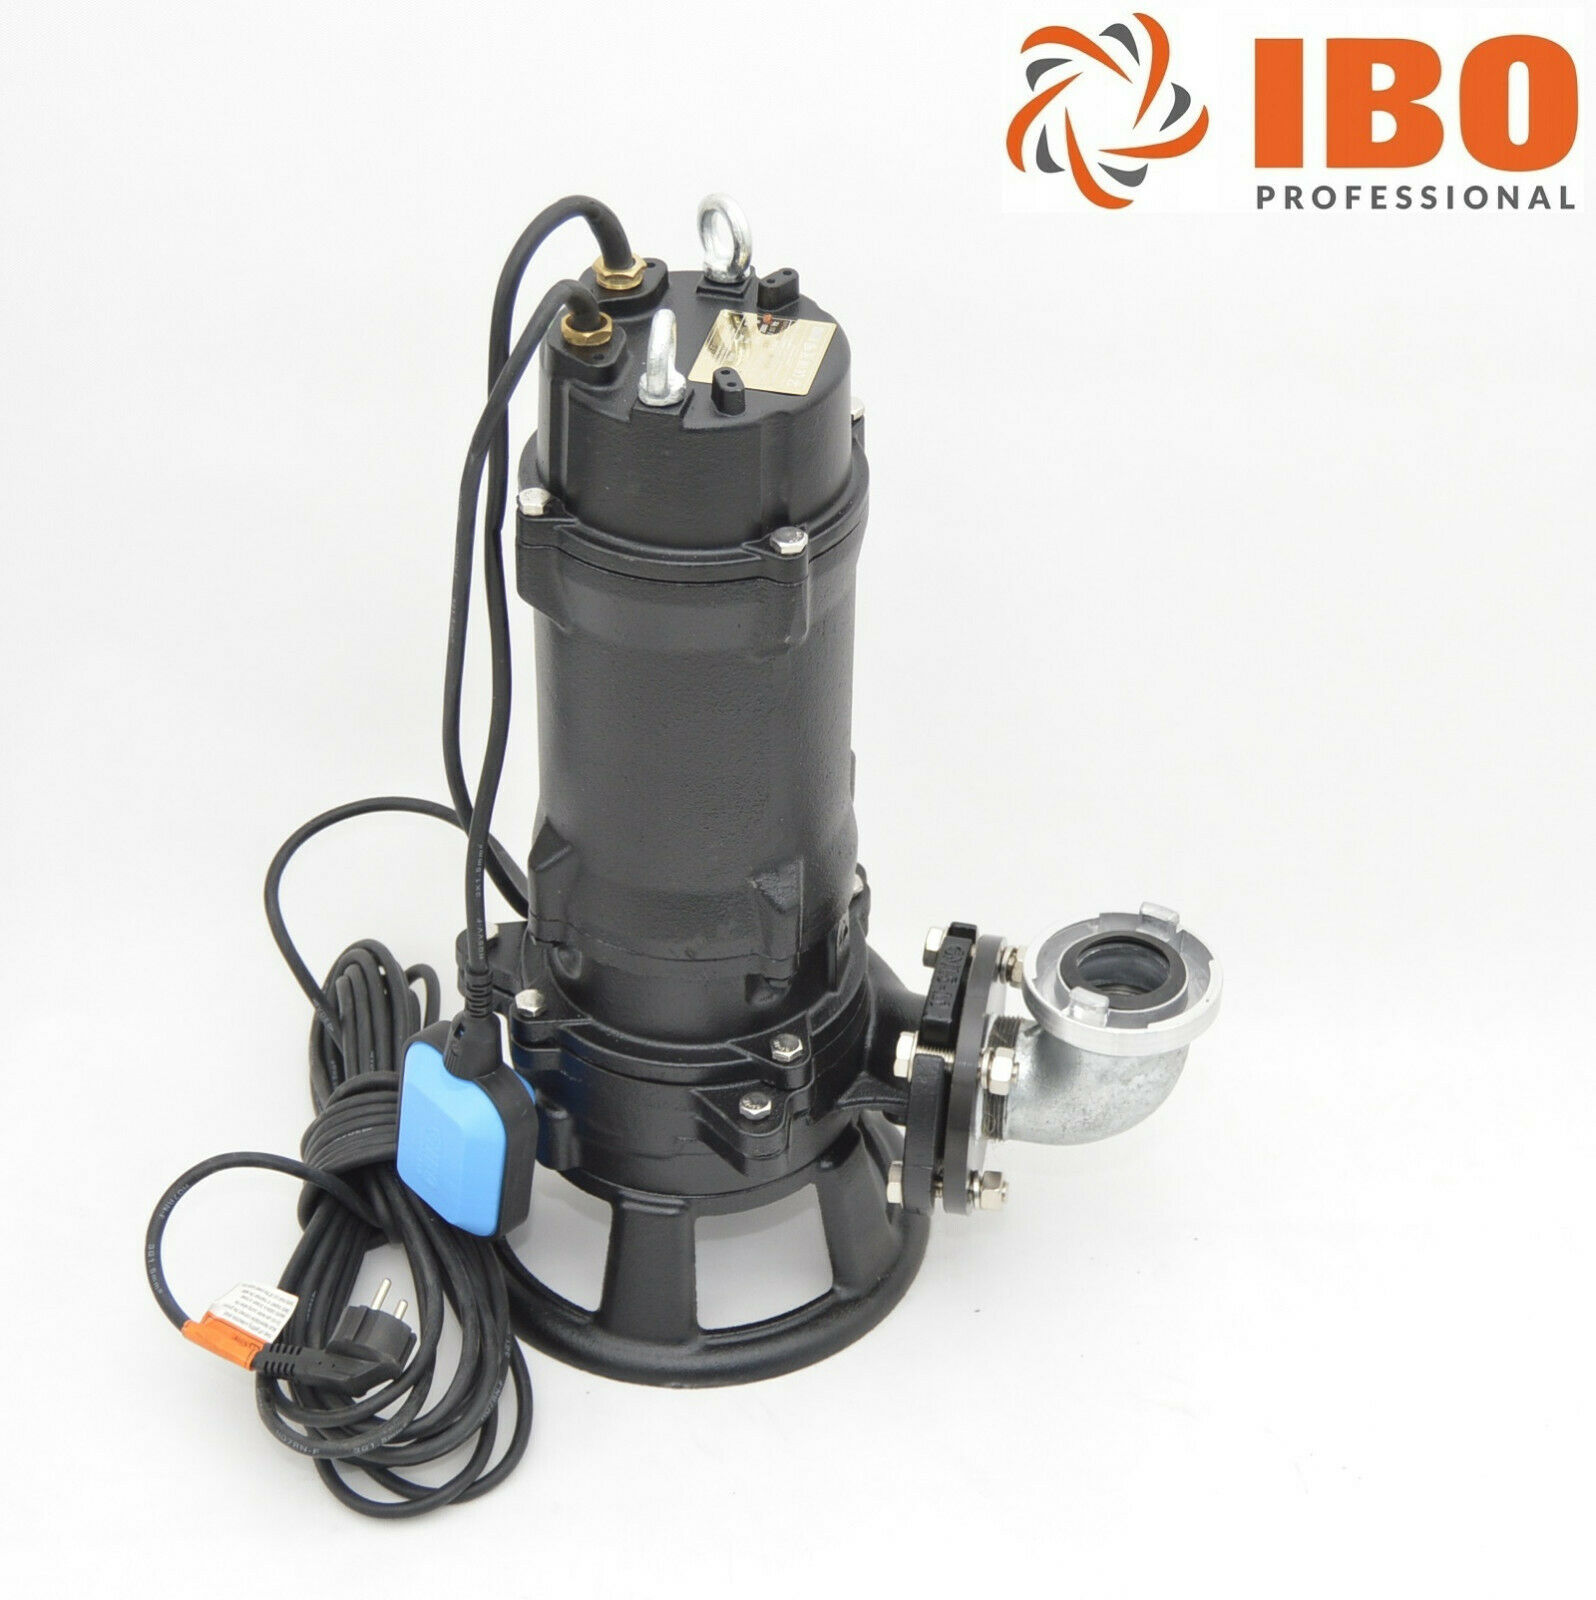 PFT Wasserpumpe als Saugpumpe AV 1000 standalone, 230 V, 1 Ph, 50 Hz, 0,6  kW - Fischbacher Baumaschinen